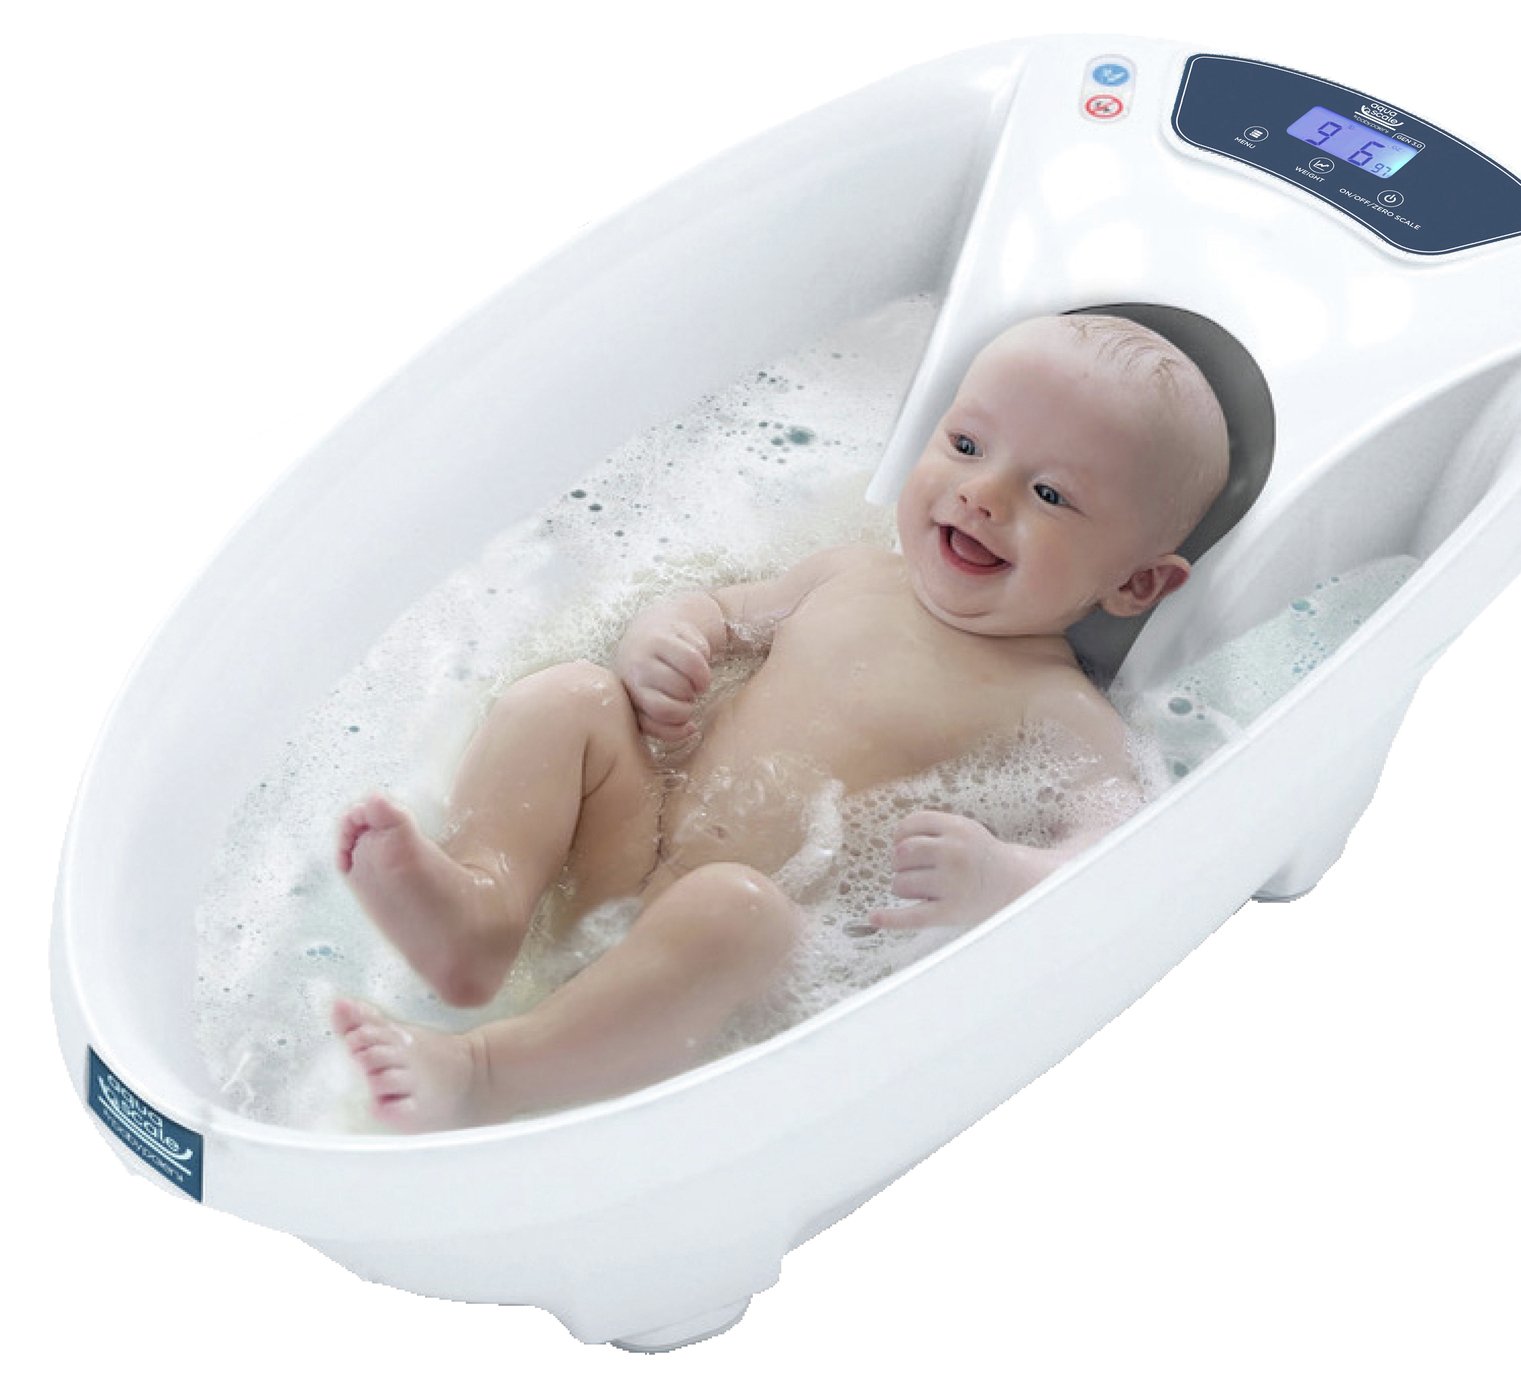 Aqua Scale Digital Baby Bath Review